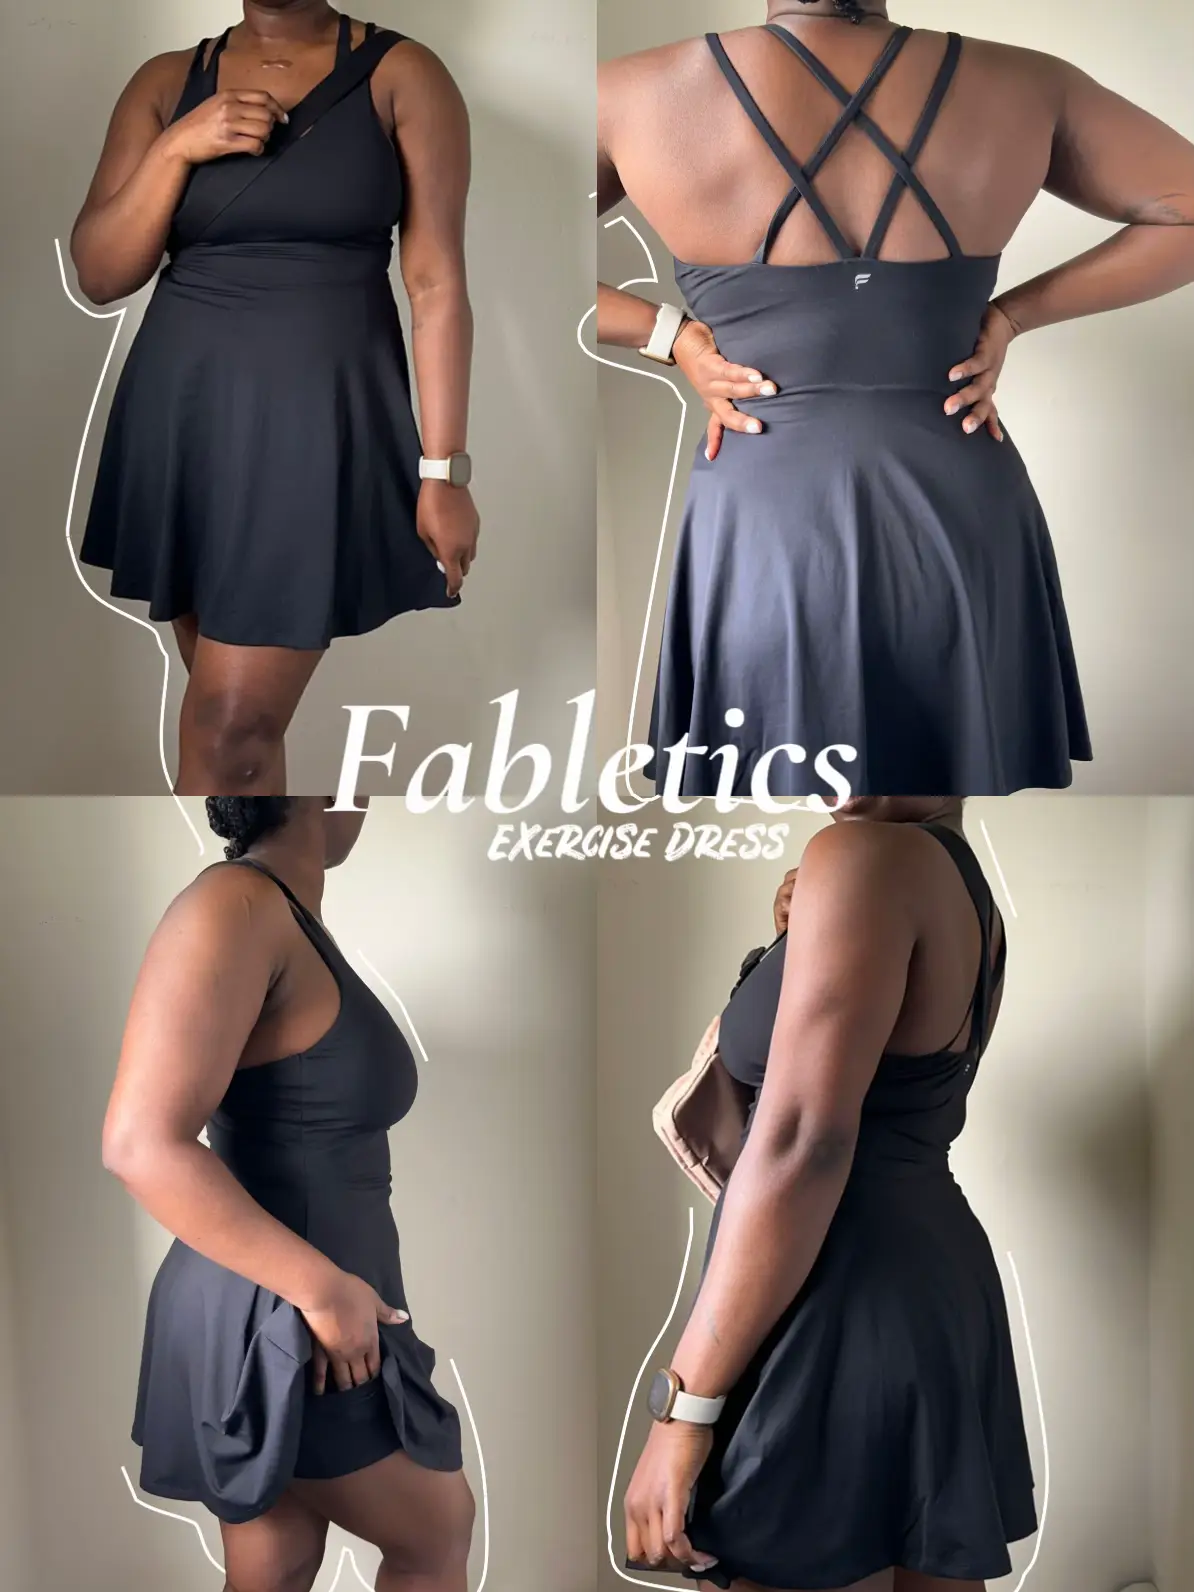 Fabletics Exercise Dress 🤍, Gallery posted by dareshapetitt